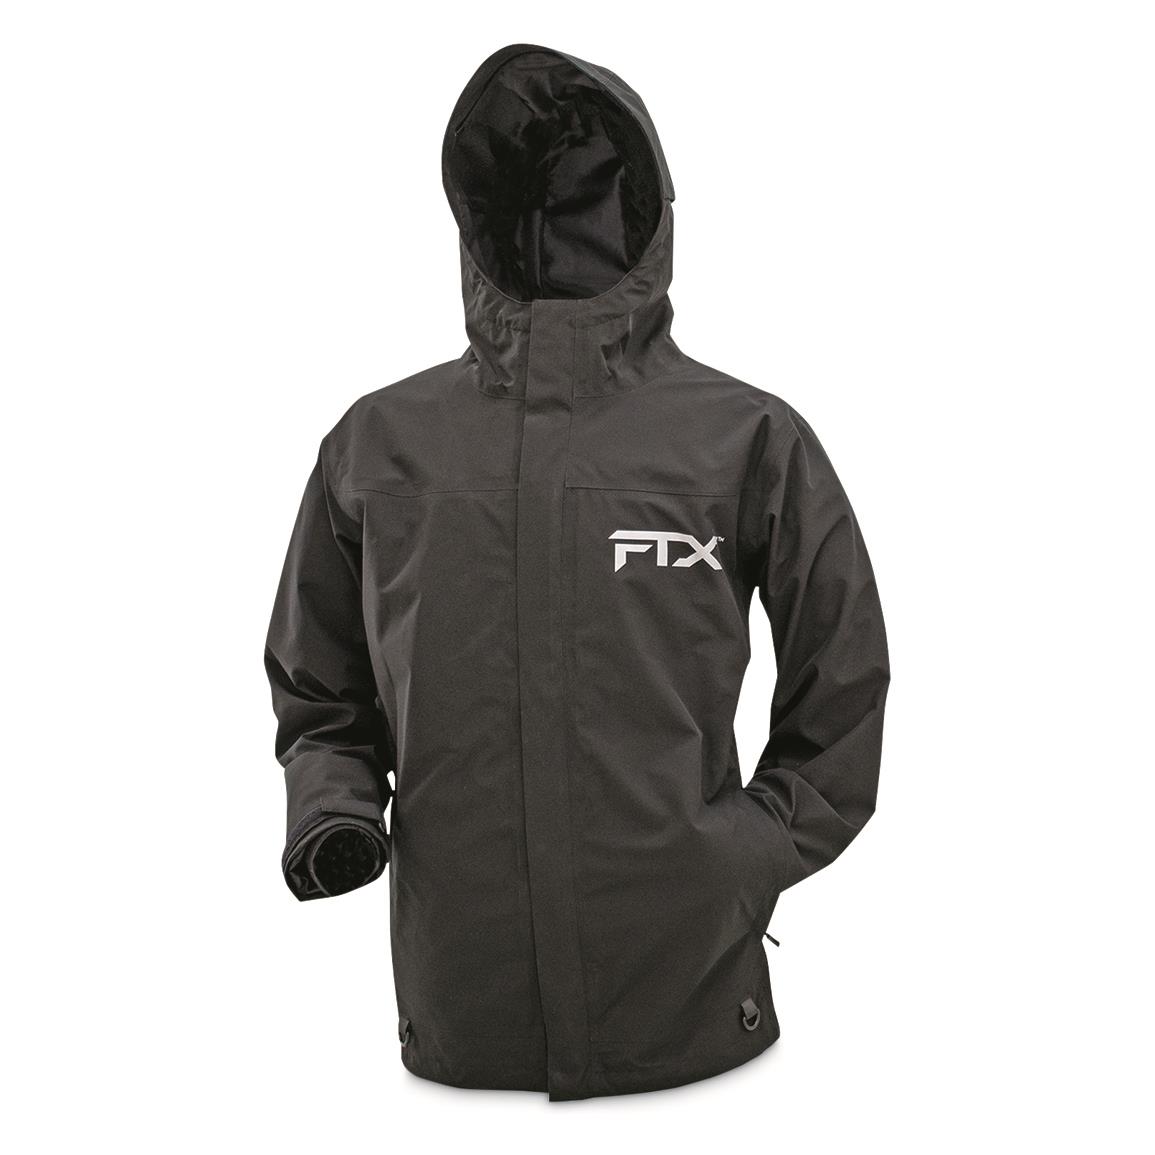 Frogg Toggs® Men's FTX Armor Jacket, Black